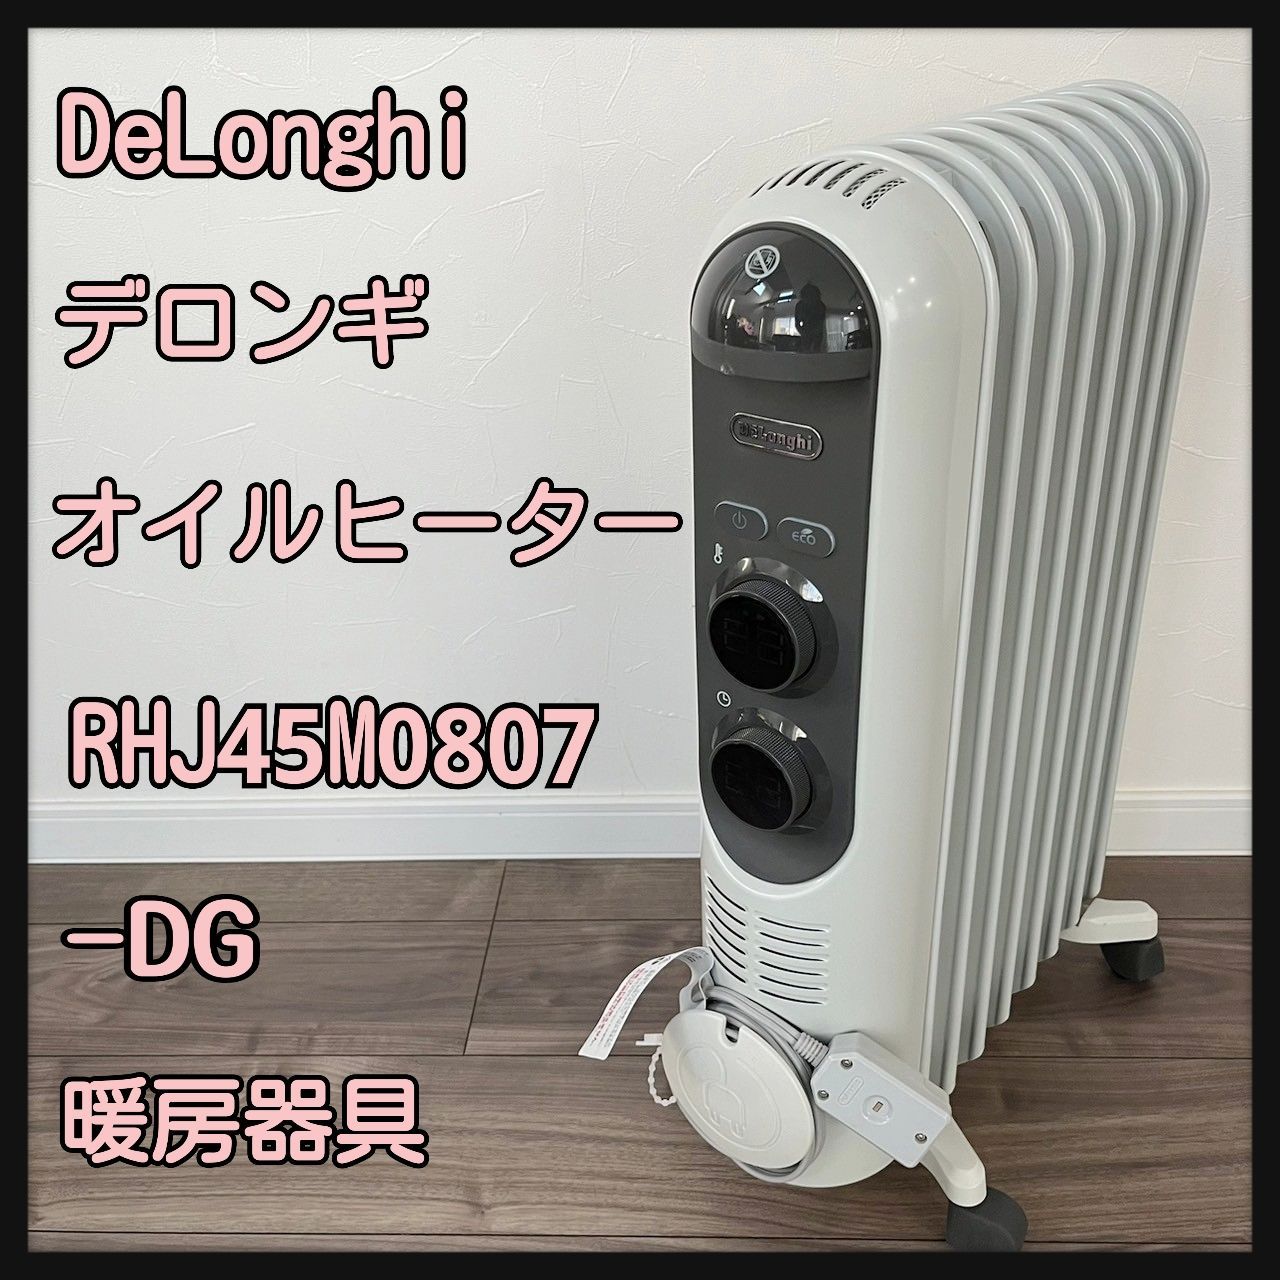 Delonghi デロンギ オイルヒーター RHJ45M0807-DG 動作品目立つ大きな 